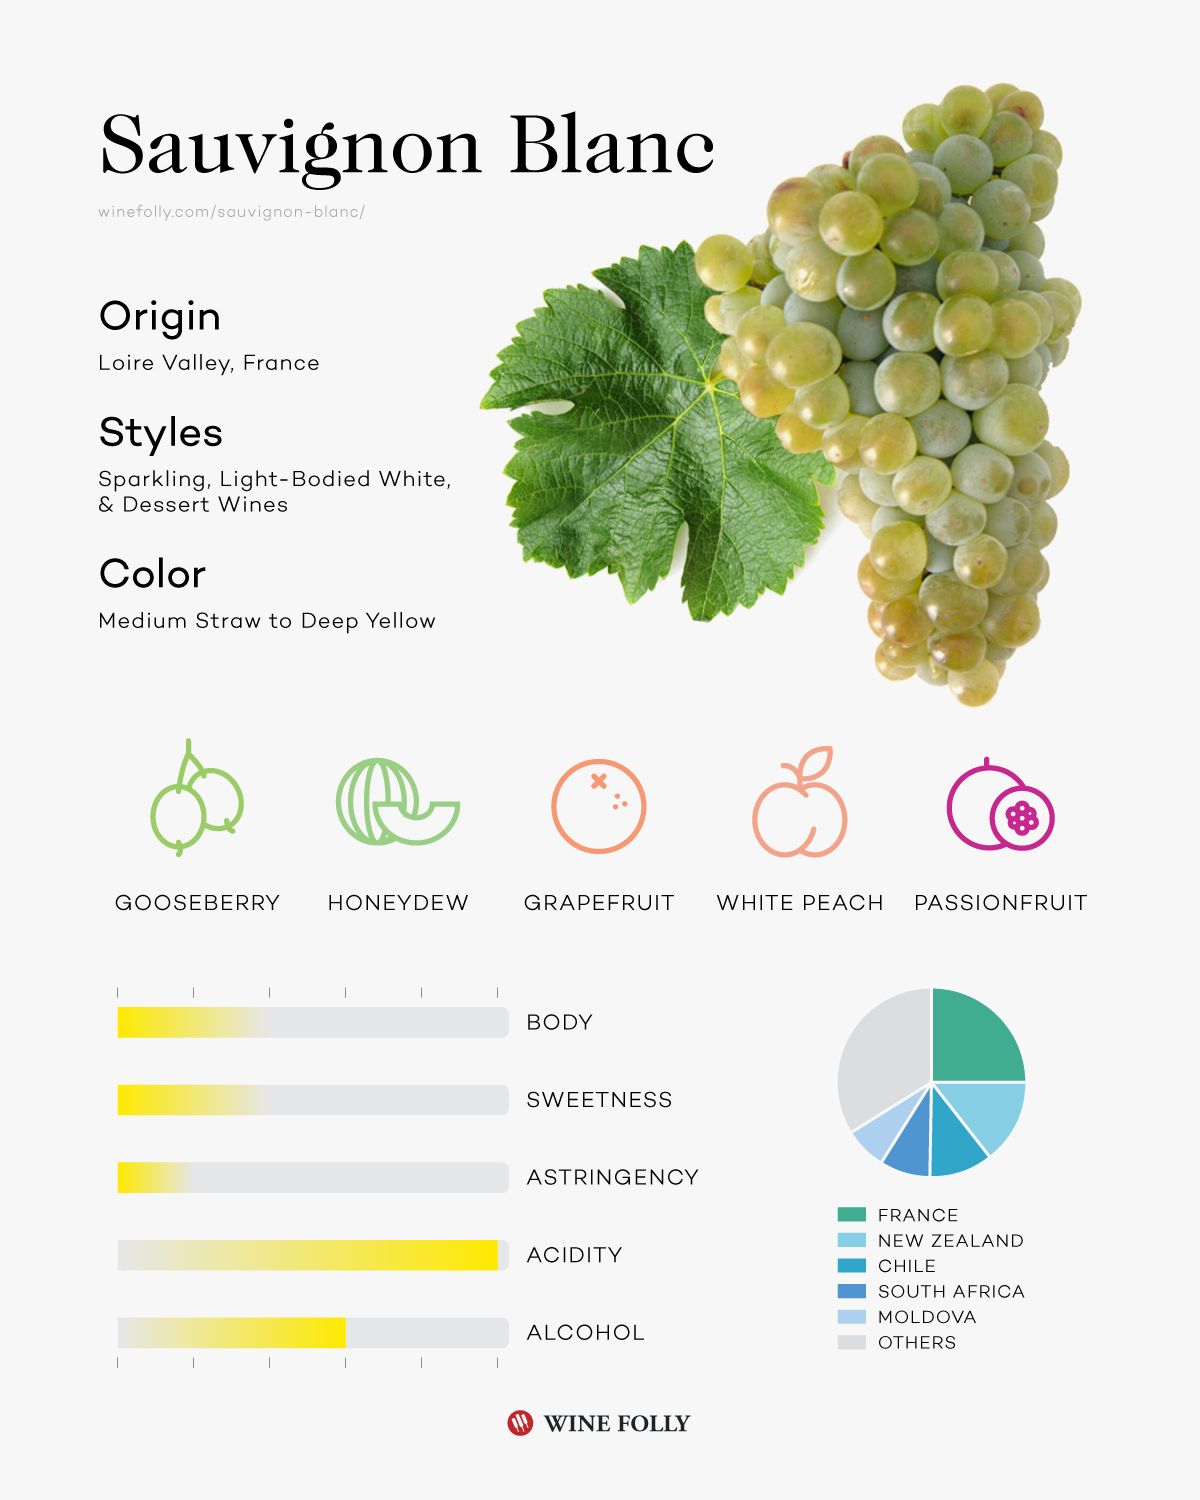 Infografski profil okusa vina sauvignon Blanc, ki ga je objavil Wine Folly 2019